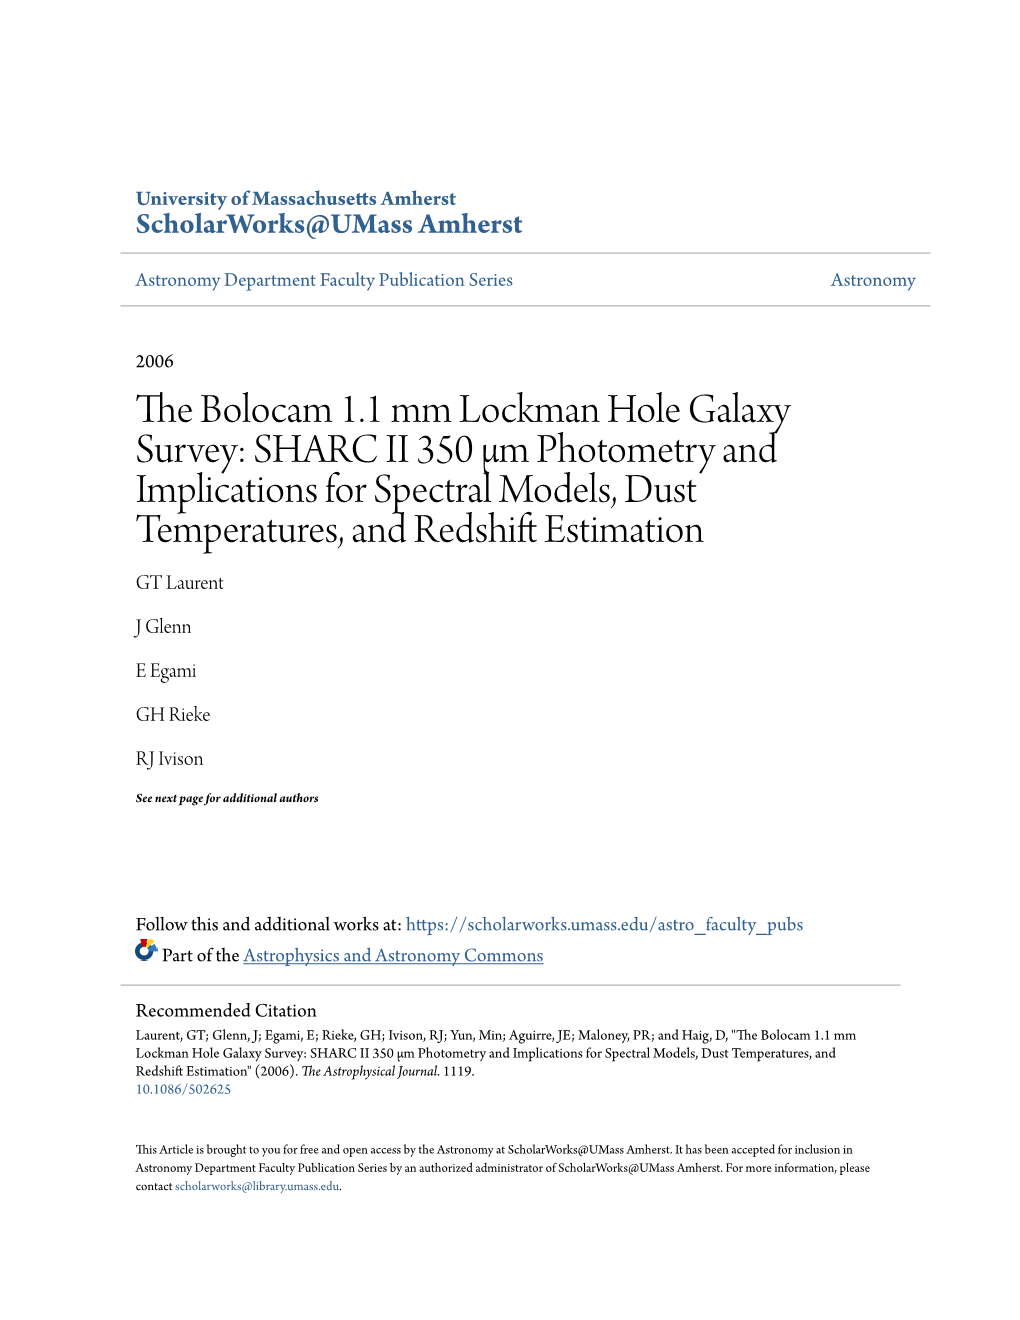 The Bolocam 1.1 Mm Lockman Hole Galaxy Survey: SHARC II 350 Î¼m